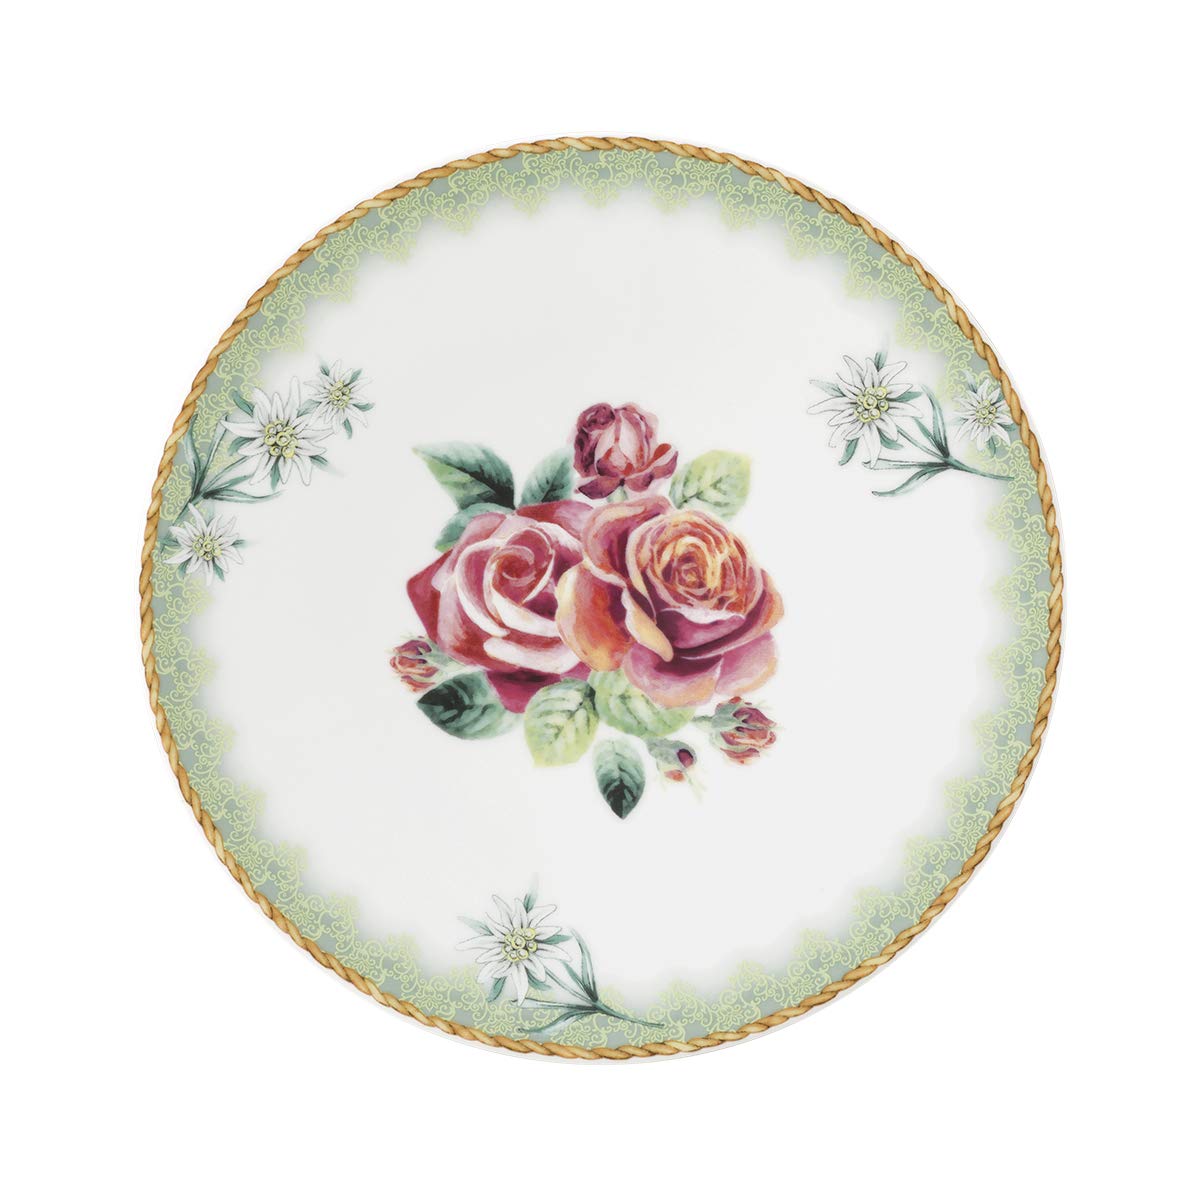 Seltmann 001.748976 Life Valerie Porcelain Pasta/Soup Plate, Round, Green, 22.5 cm Diameter, 2.2 cm Height, Pack of 6